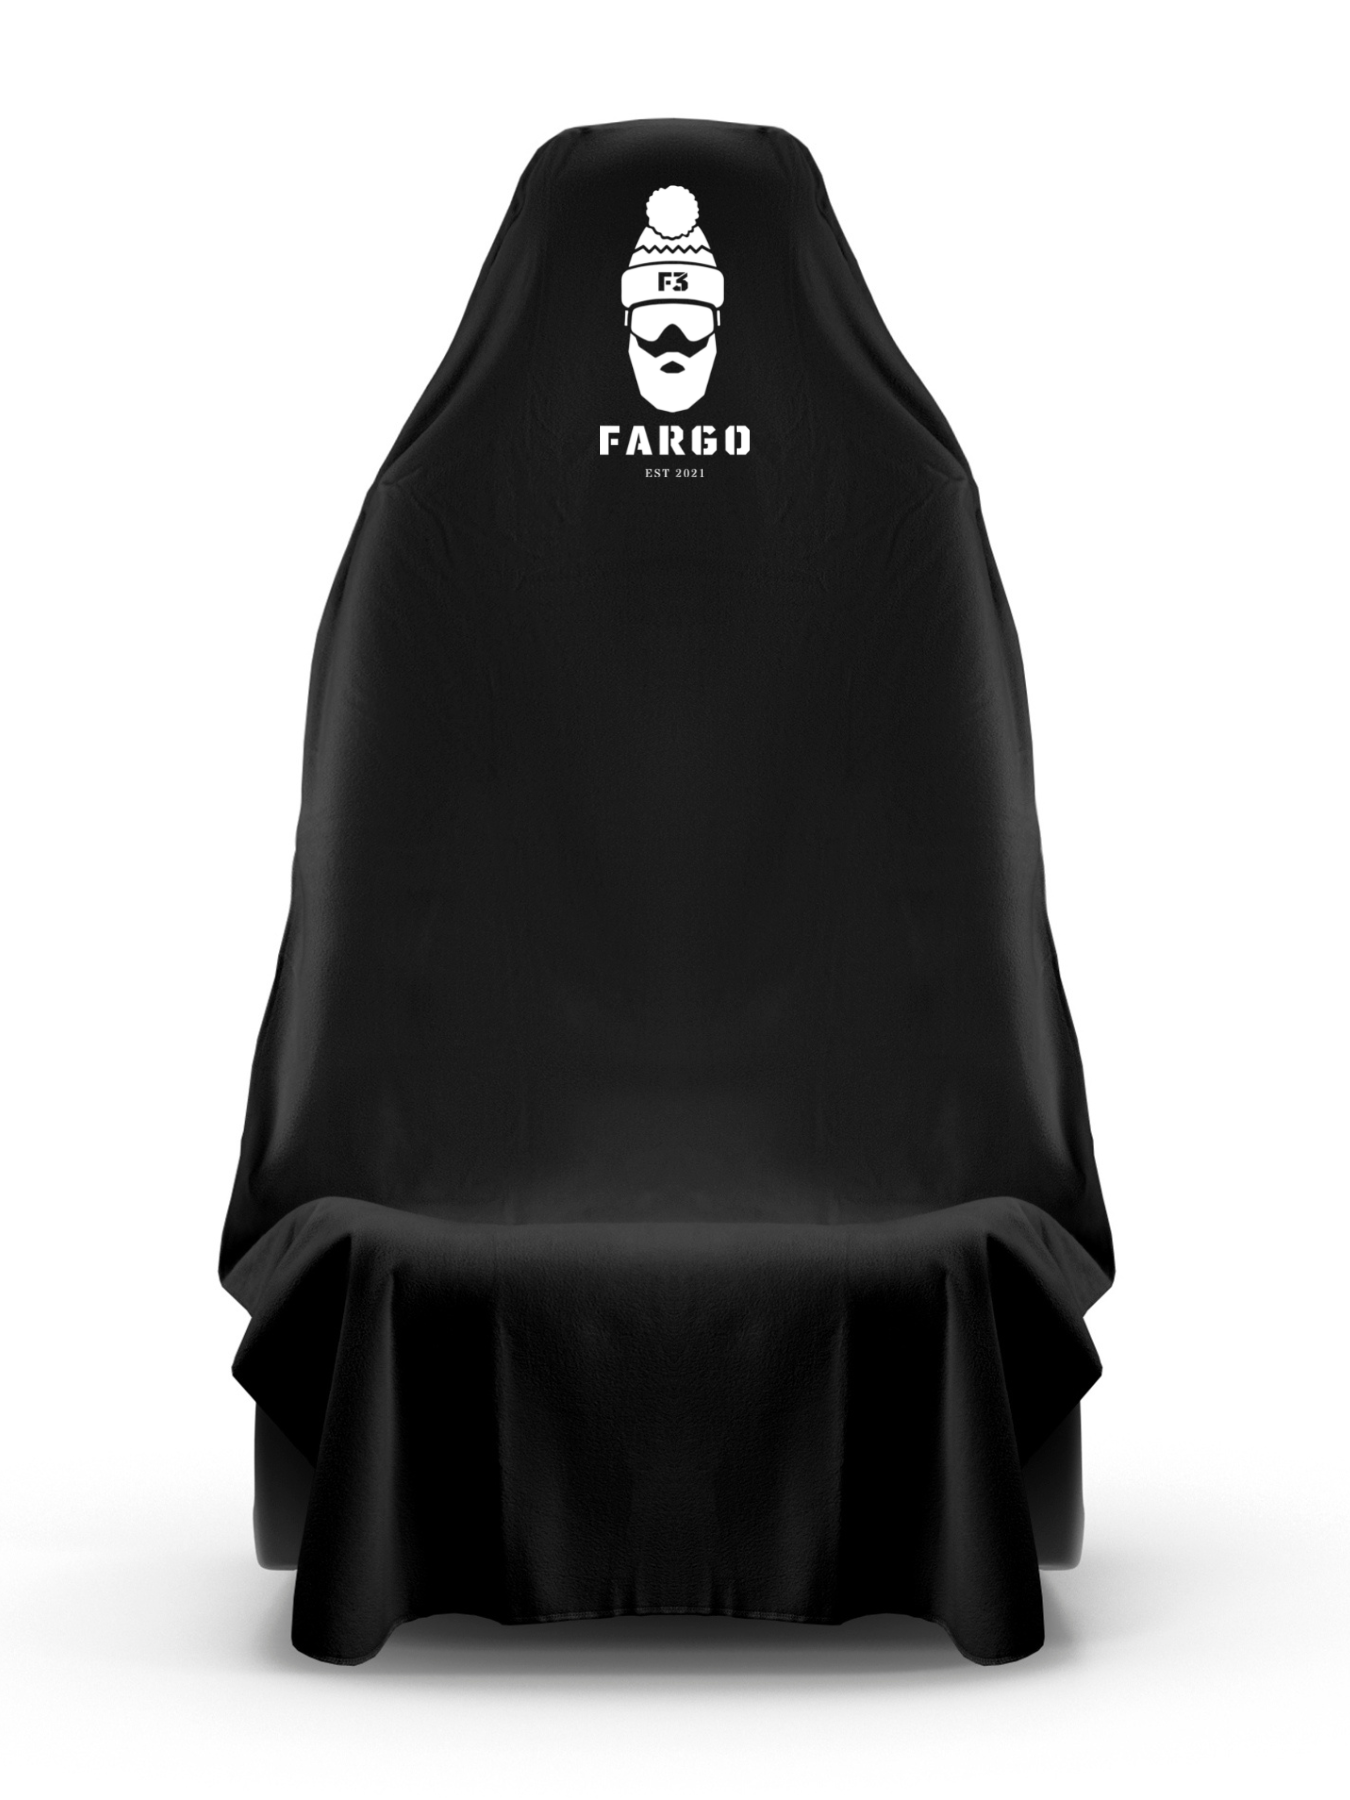 F3 Fargo Pre-Order July 2023